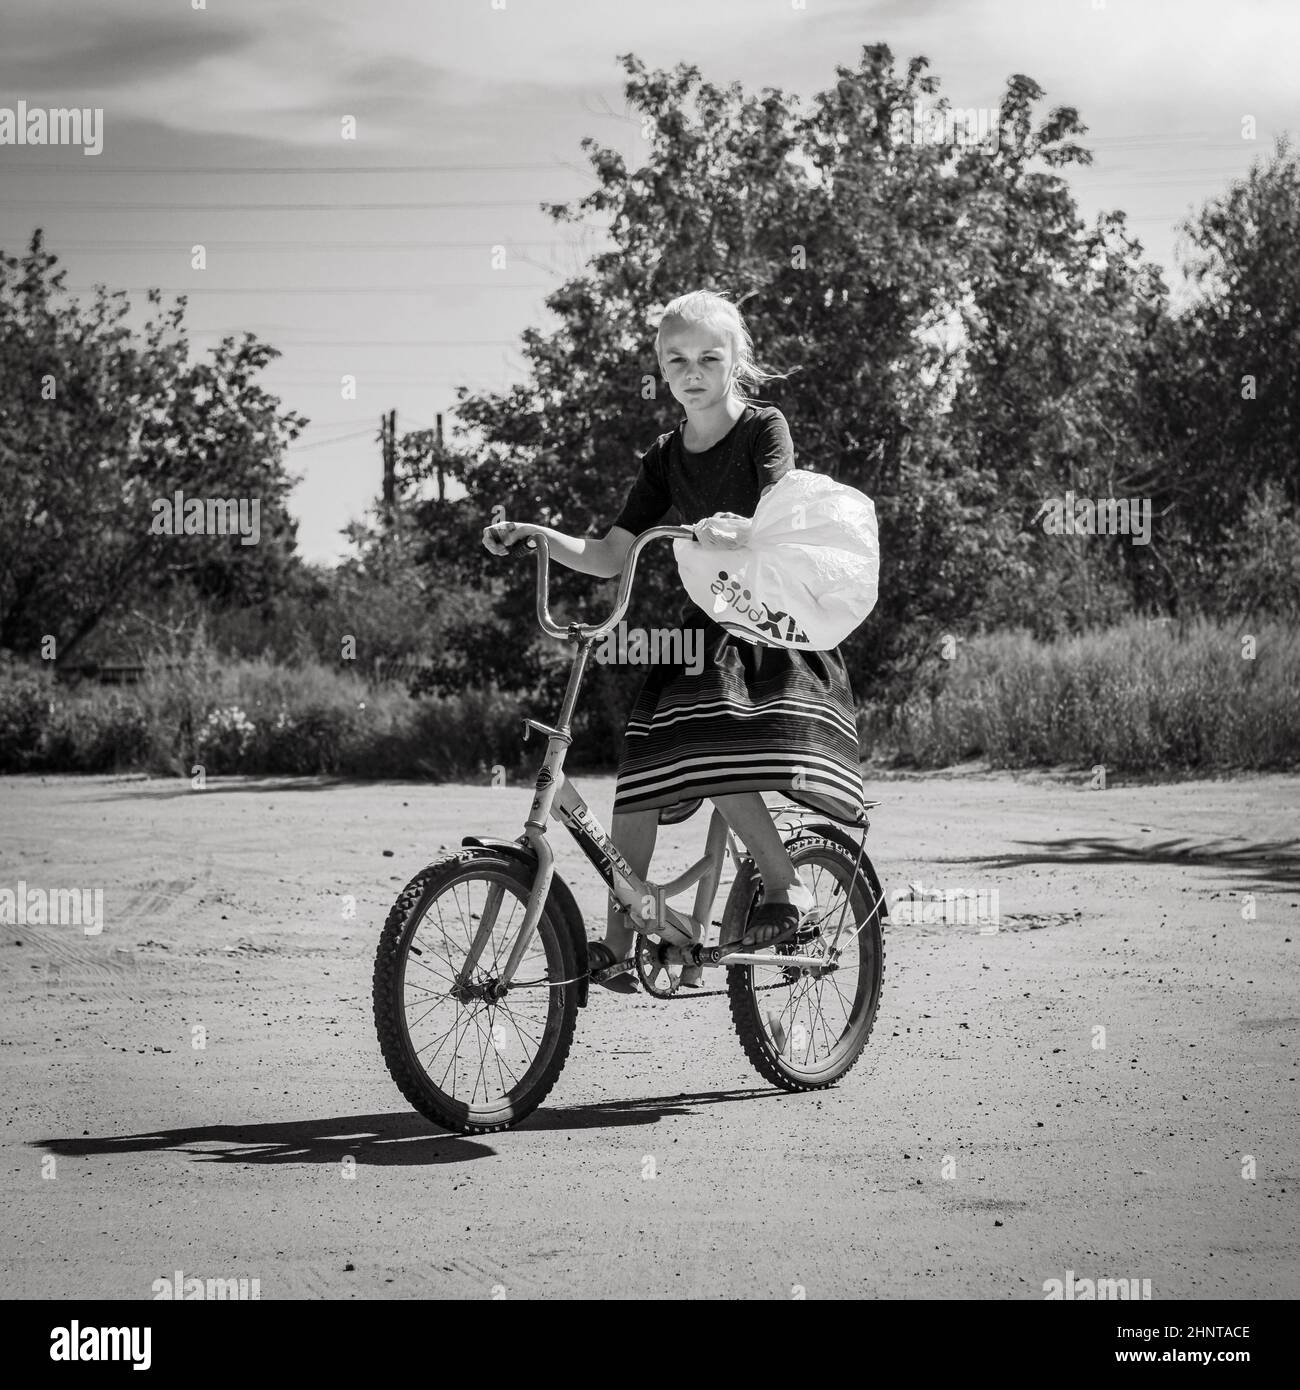 18th of July 2020, Russia, Altay,girl on a bike rural scene Stock Photo